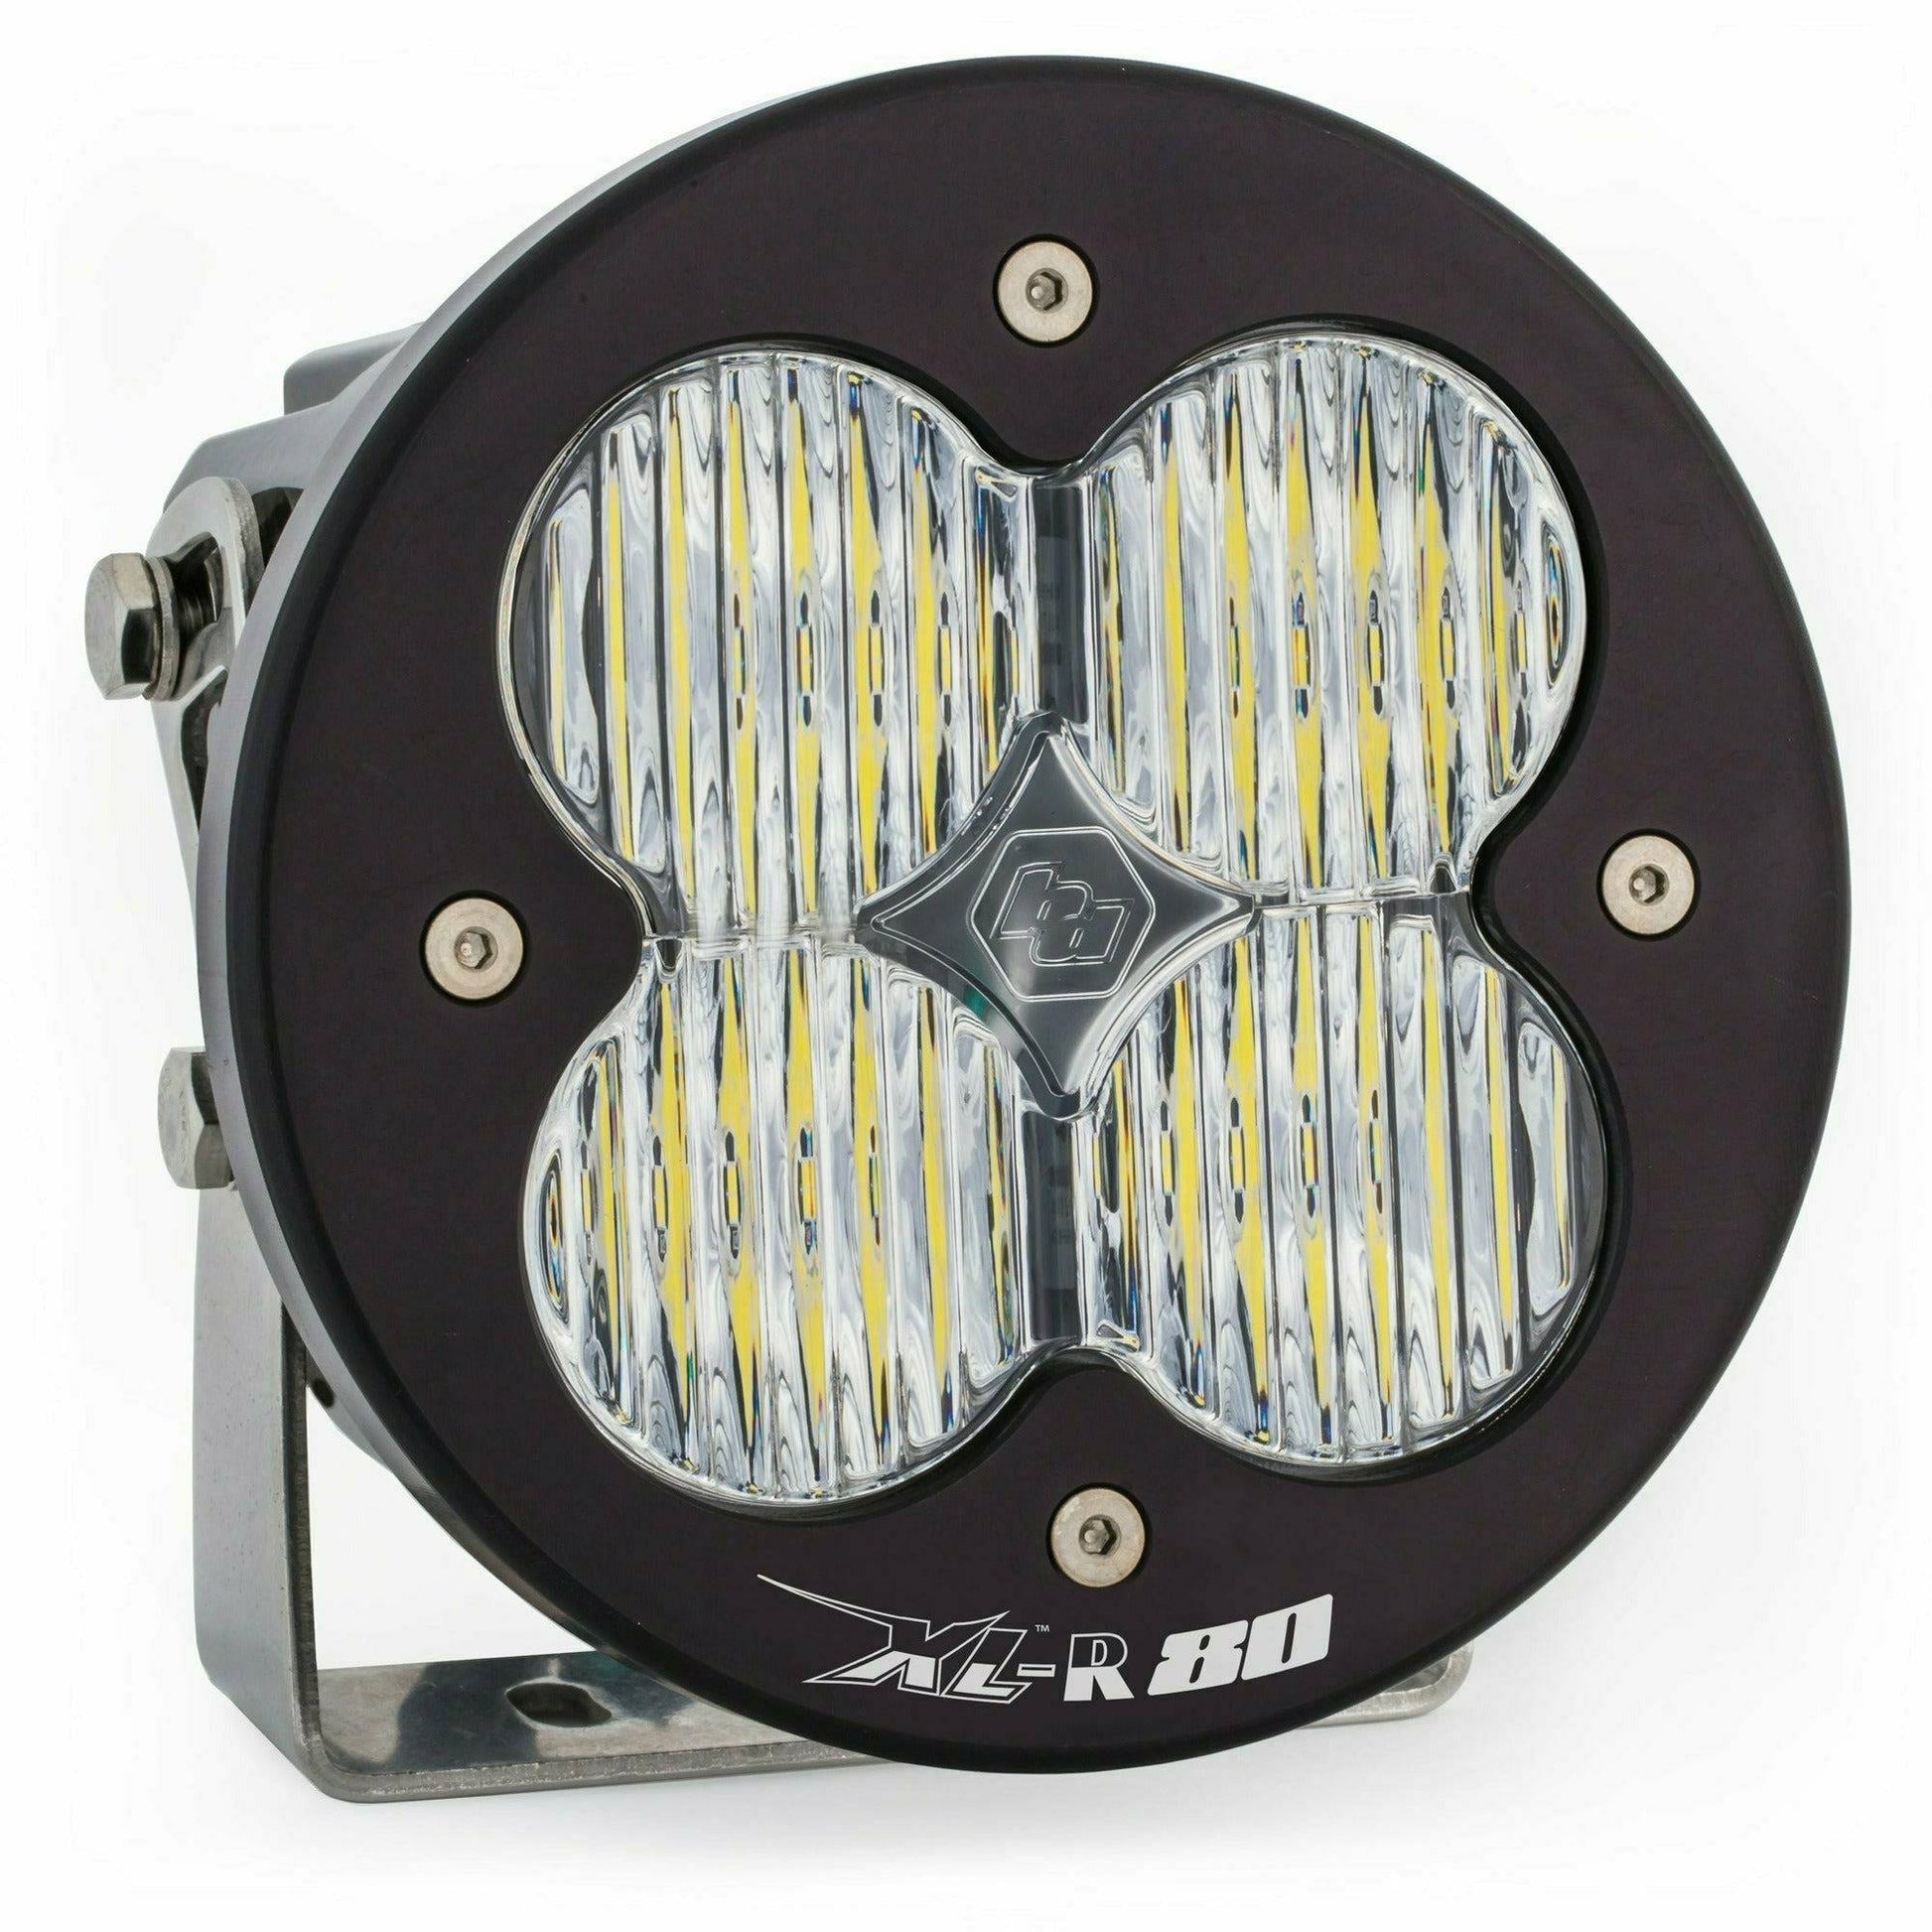 XL-R 80 LED Light Pod